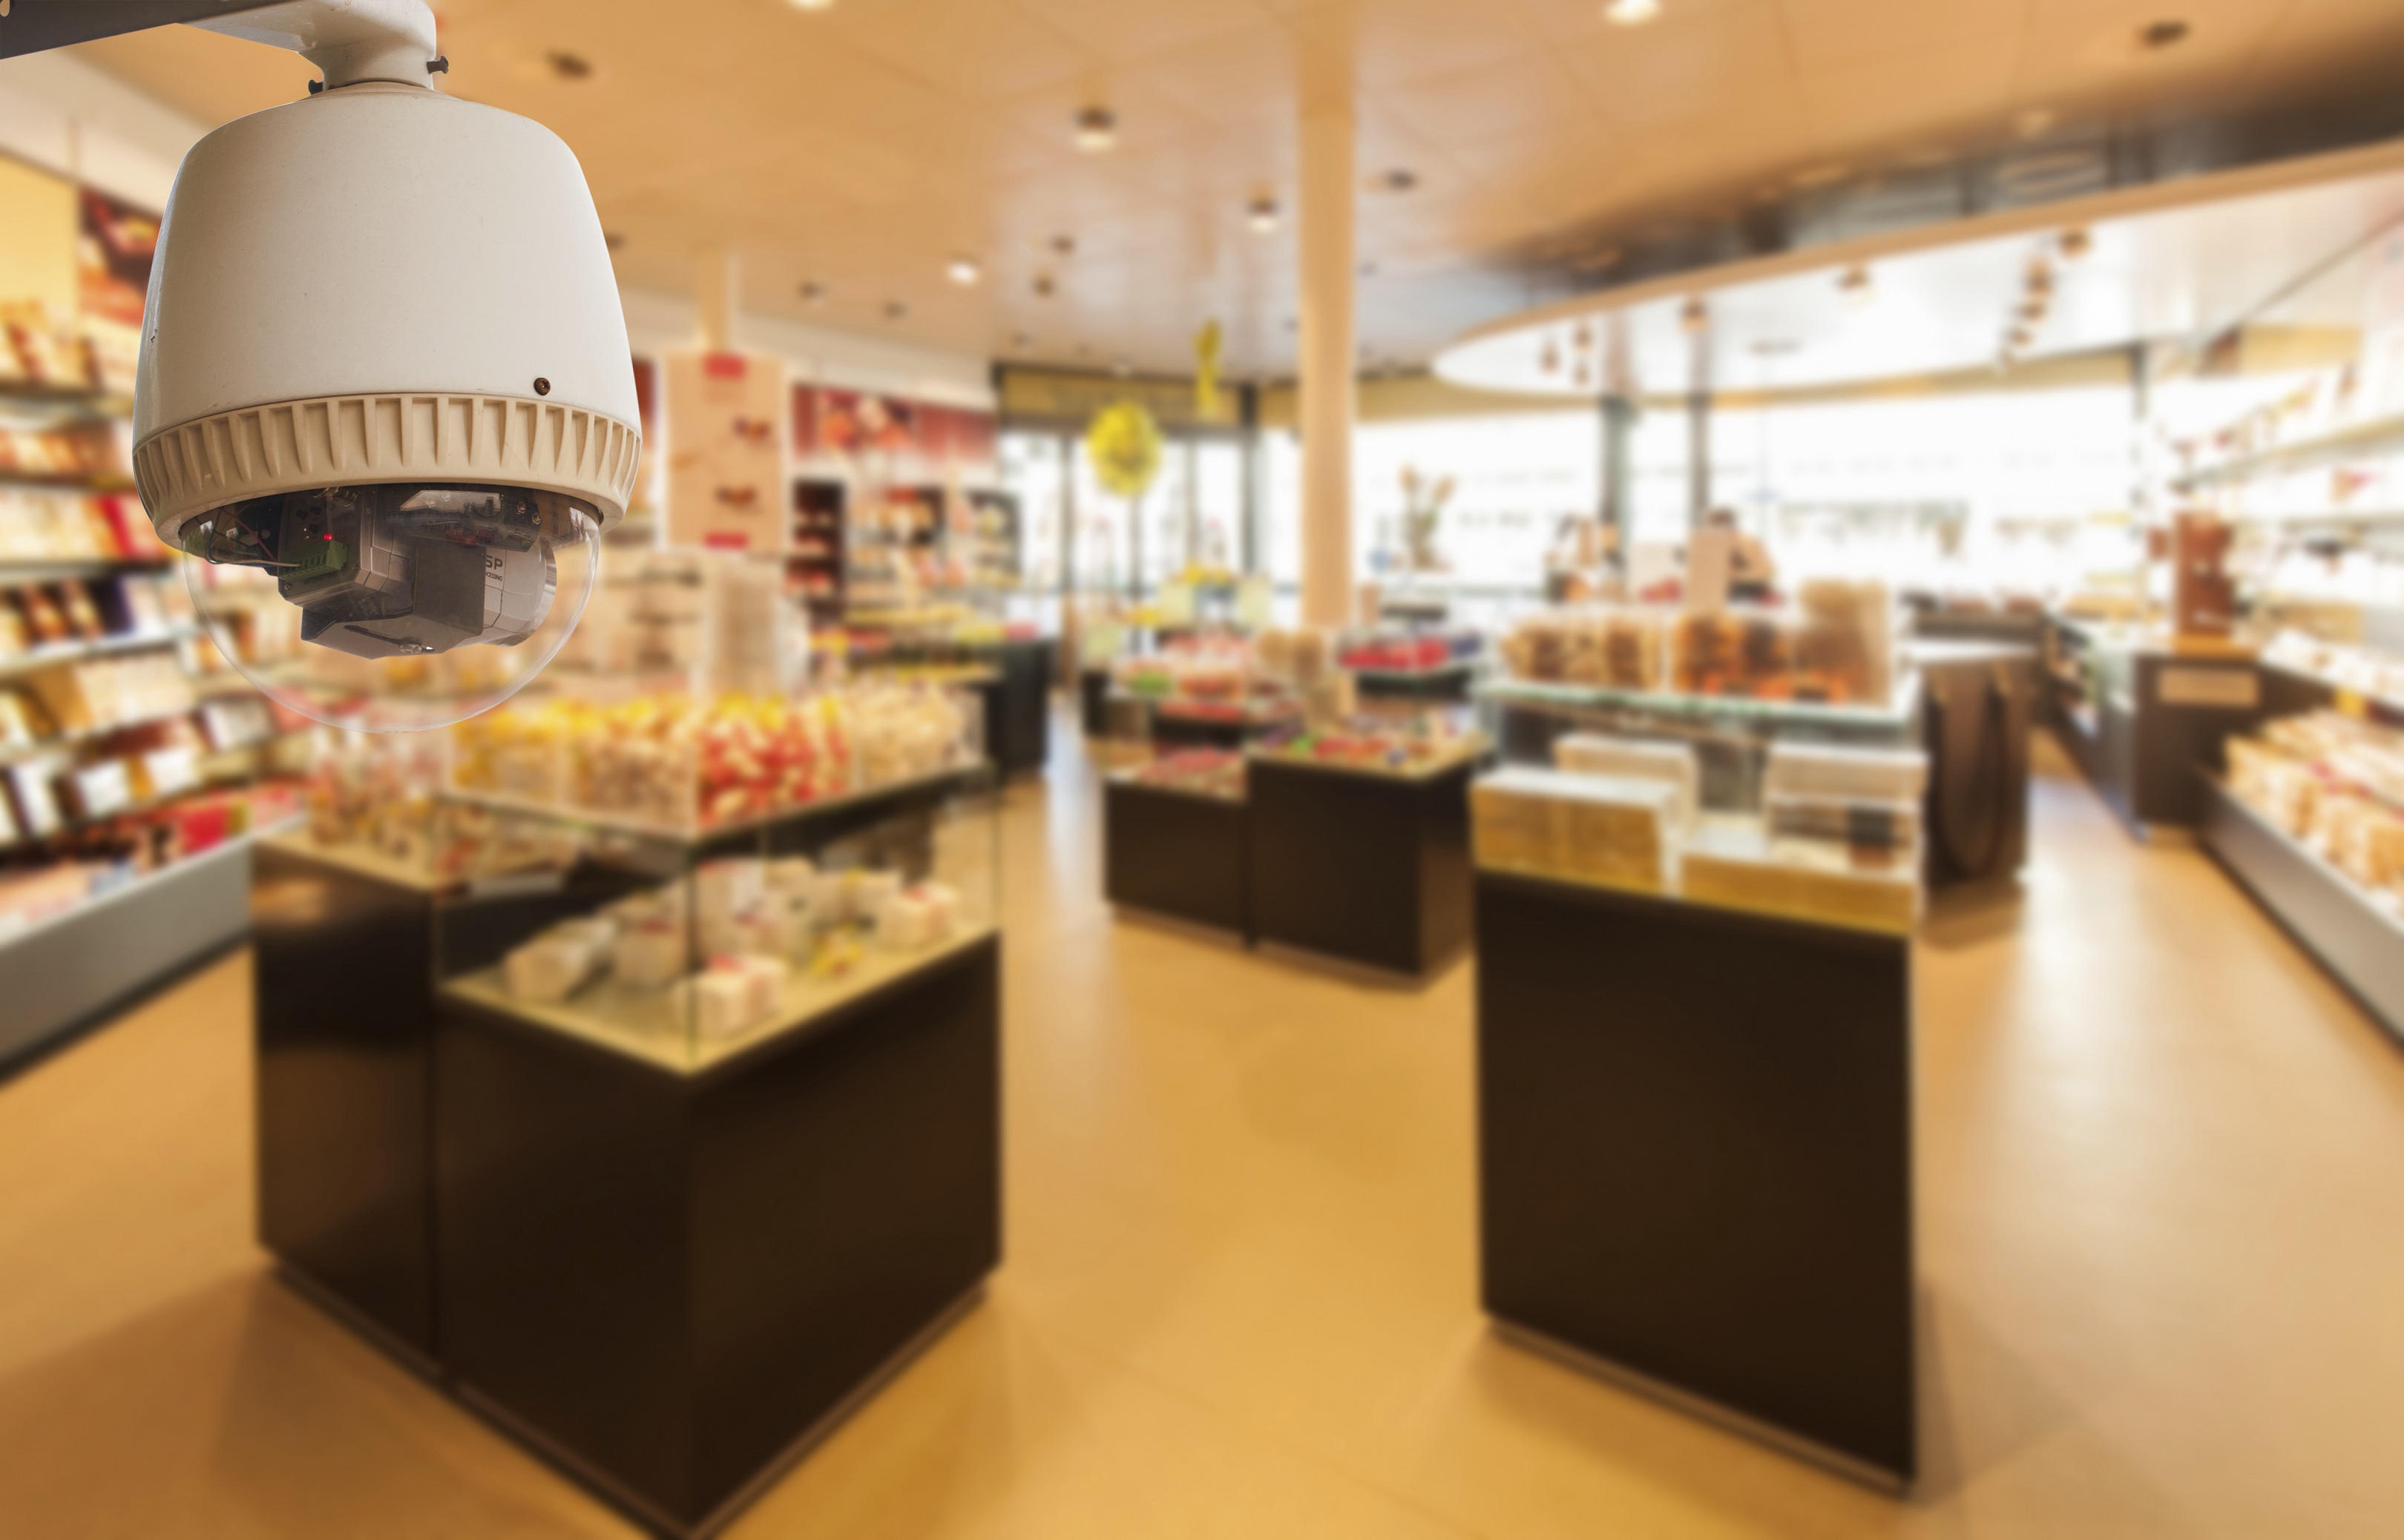 CCTV Camera Operating inside a shop